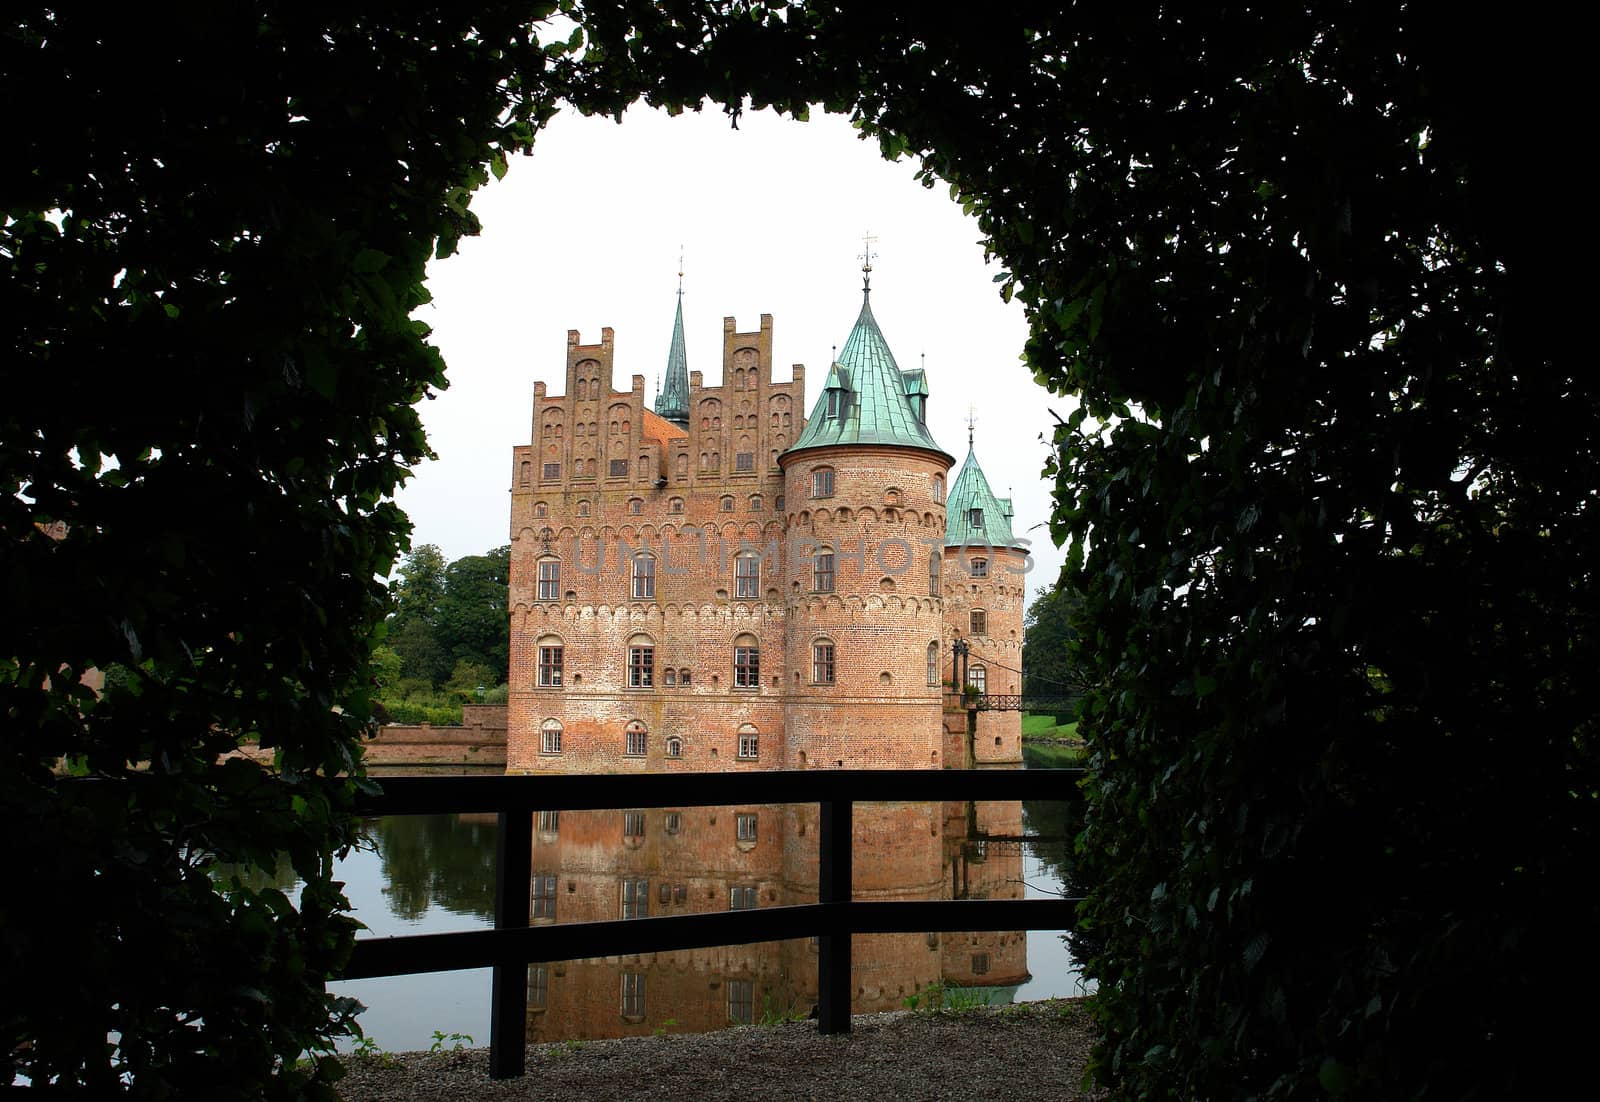 Egeskov castle Denmark by Ronyzmbow